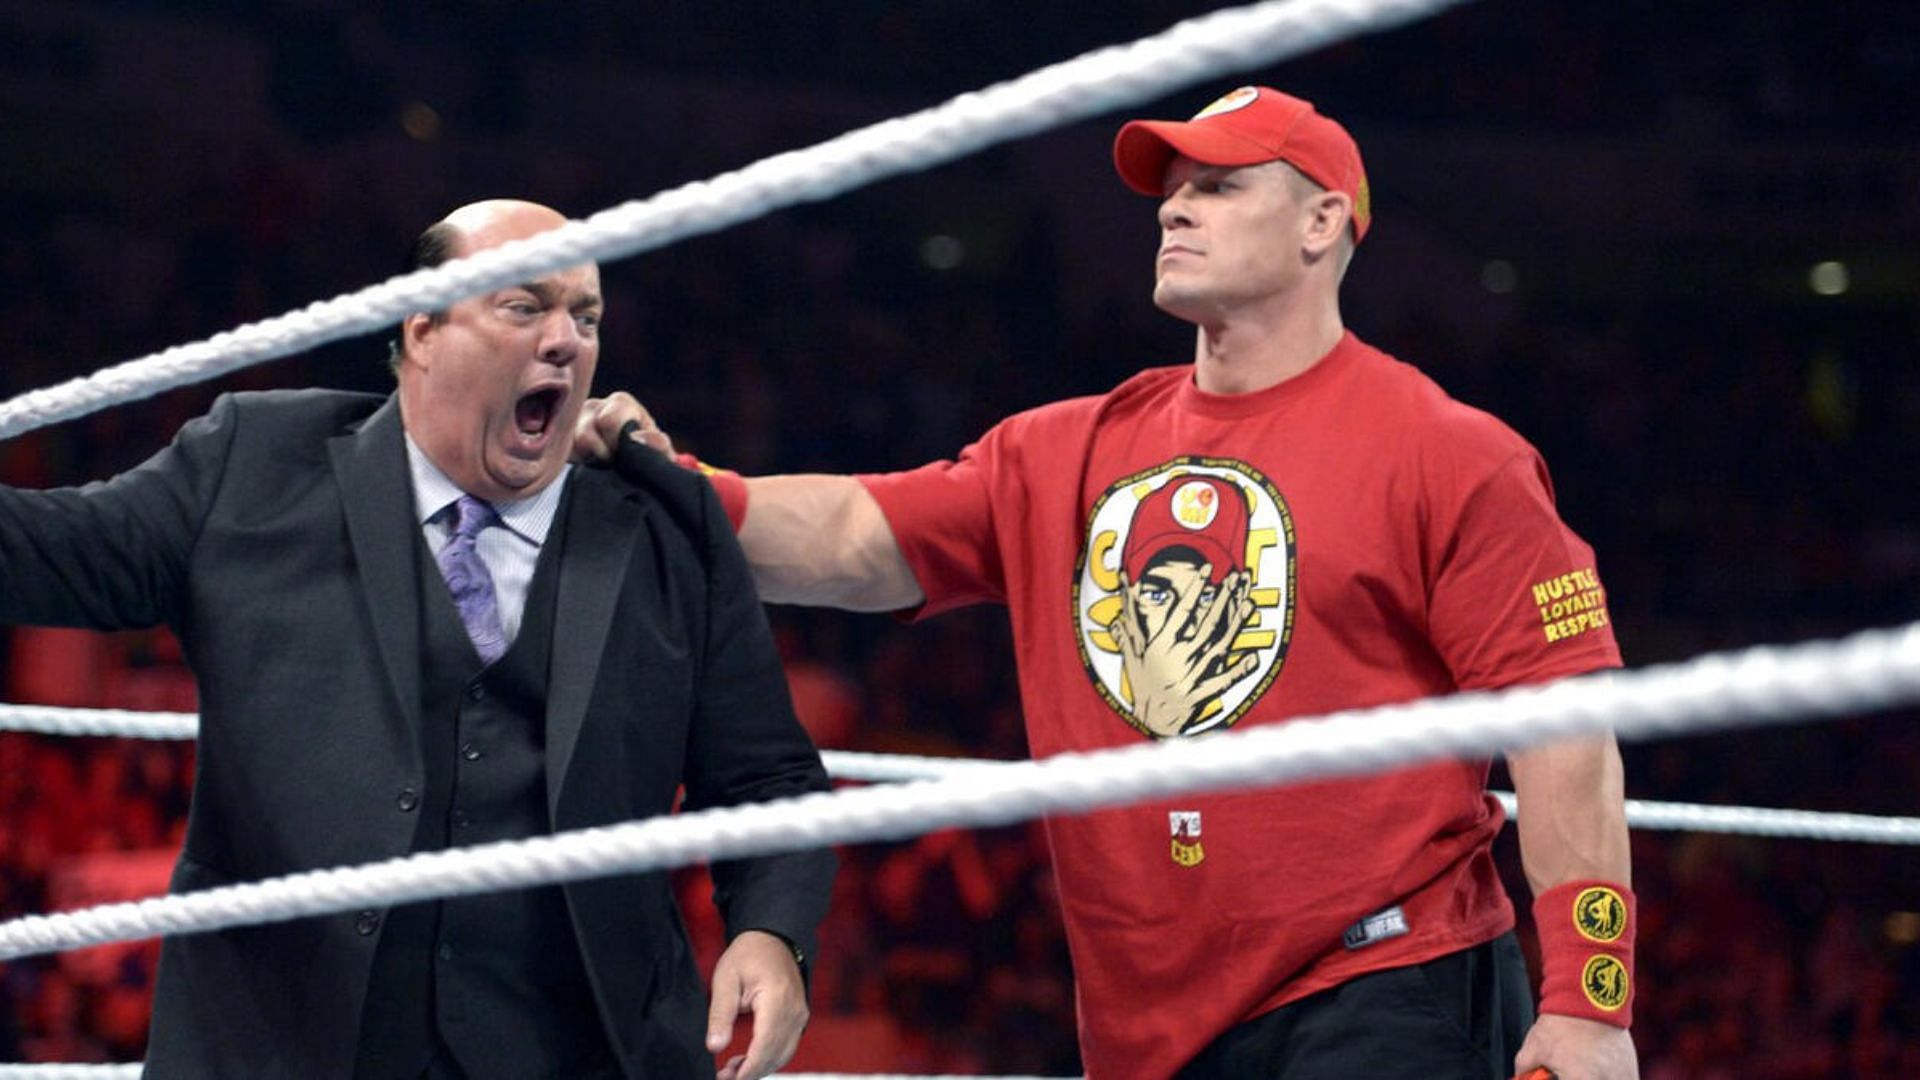 Paul Heyman and John Cena on WWE RAW days before Night of Champions 2014.